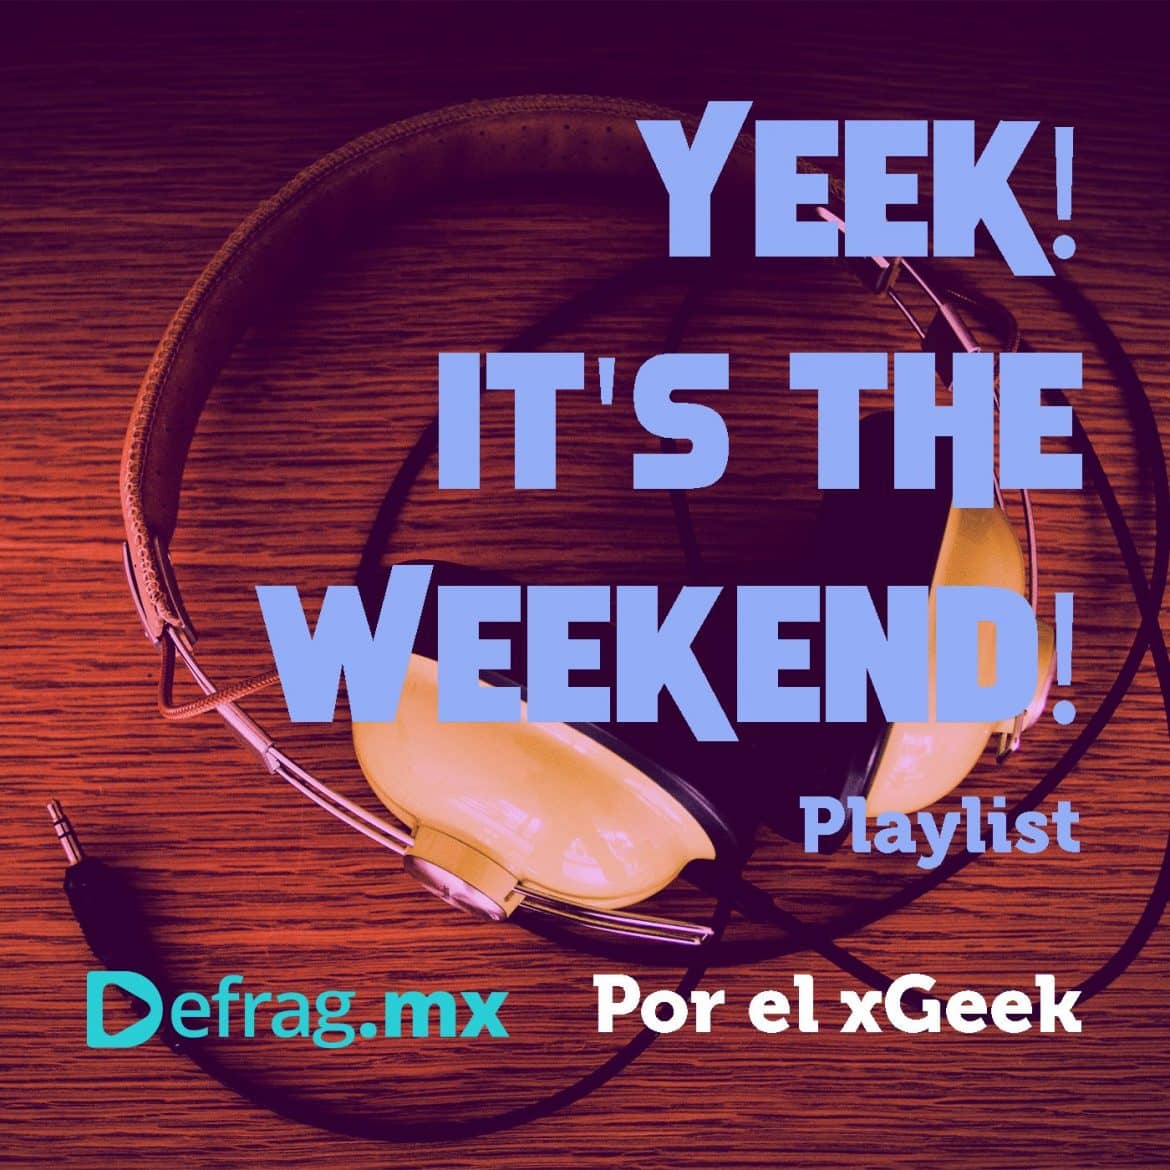 Defrag.mx Yeek! It's The Weekend! Playlist Abr 29 2022